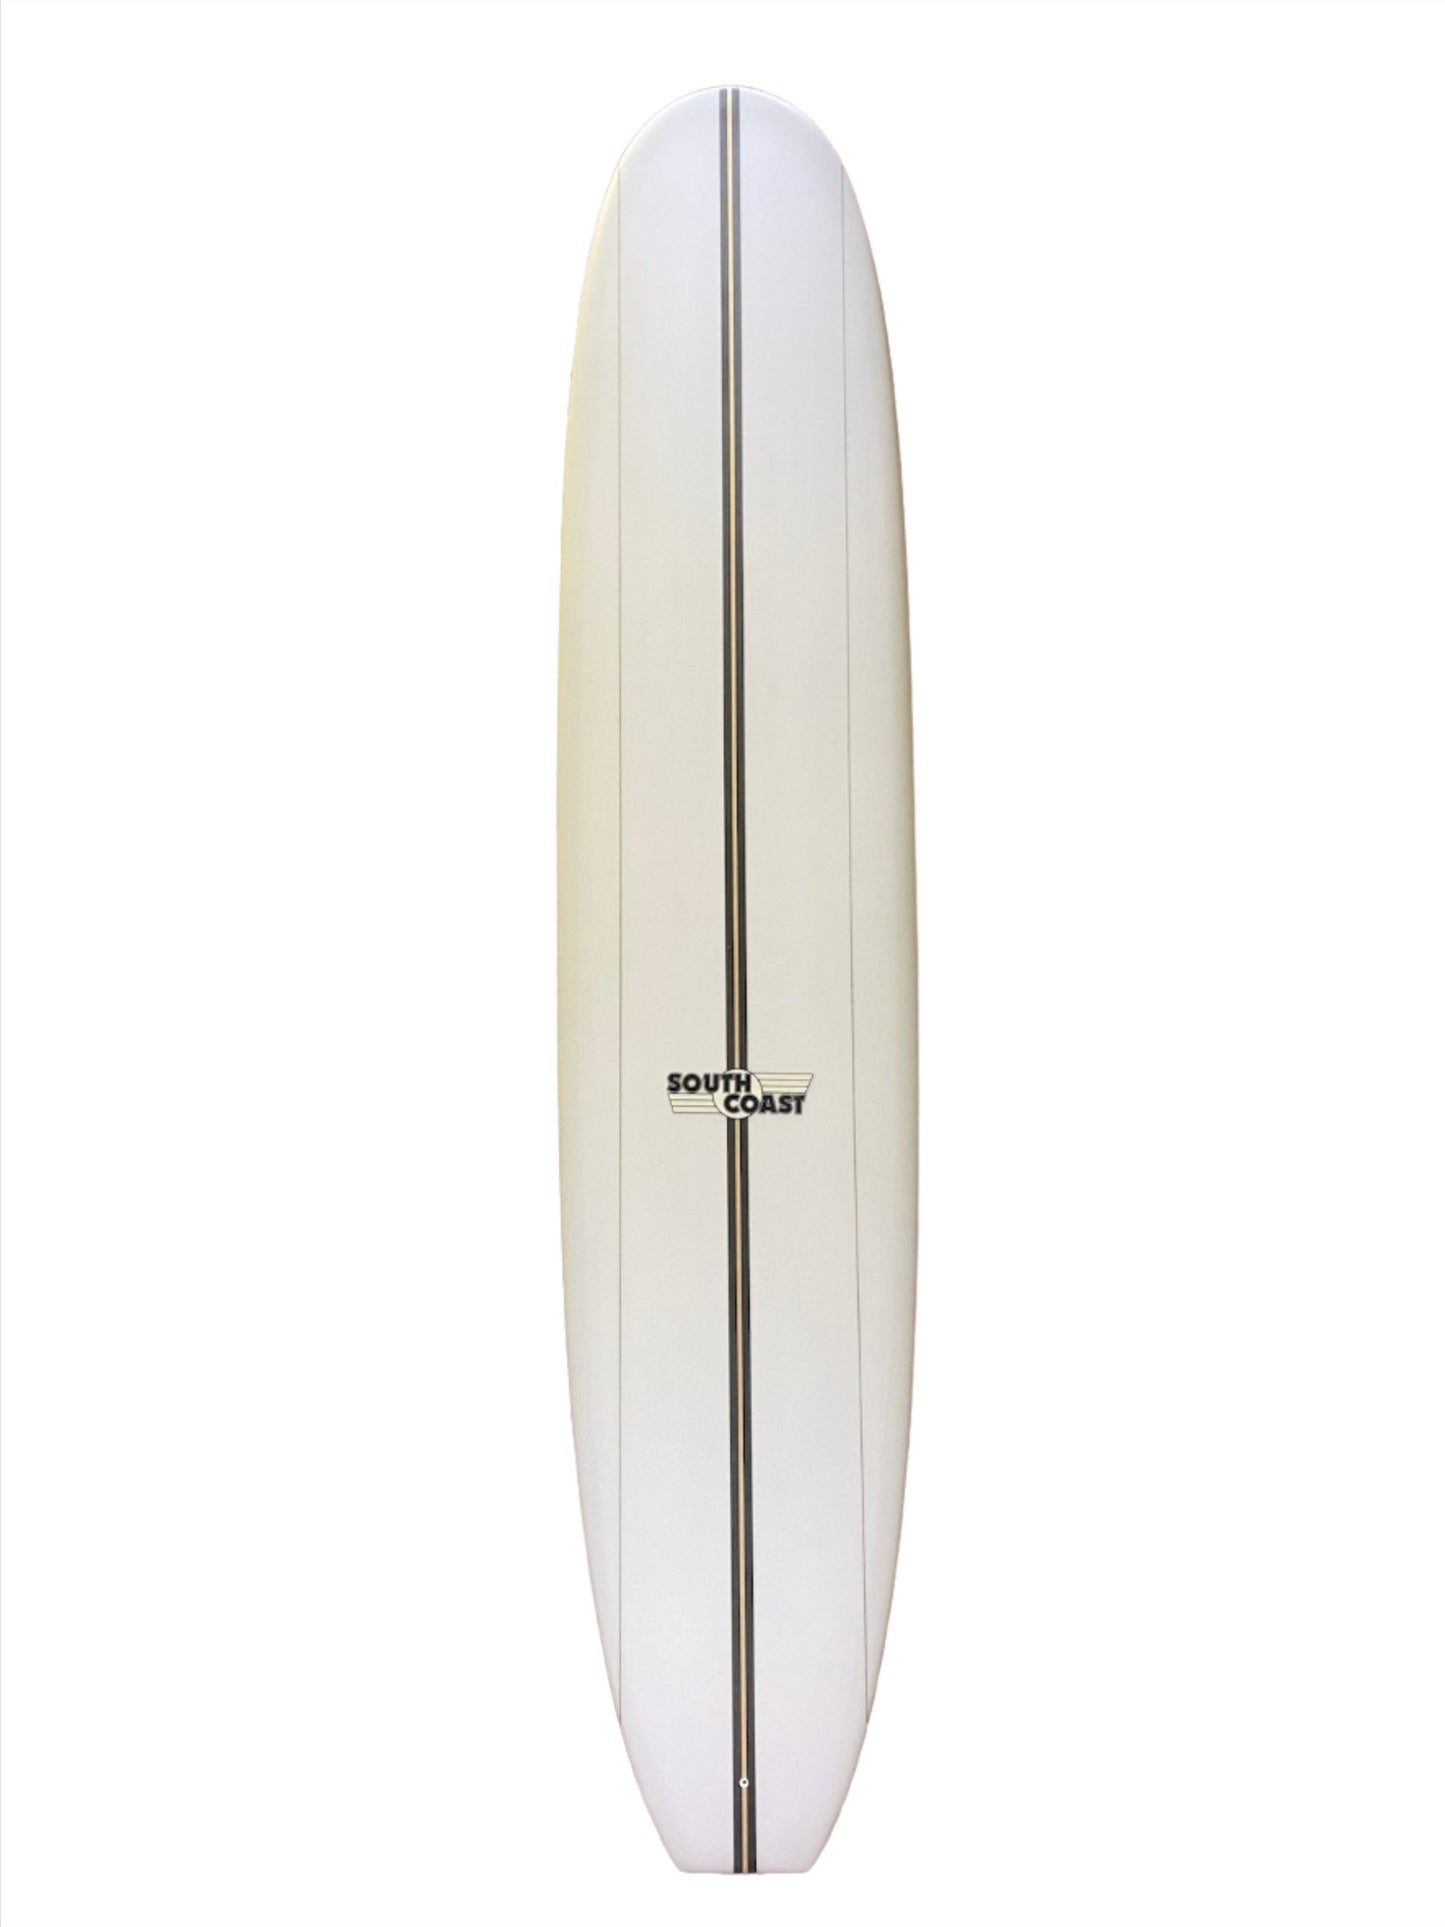 South Coast Tall Can Surfboard 9'0"